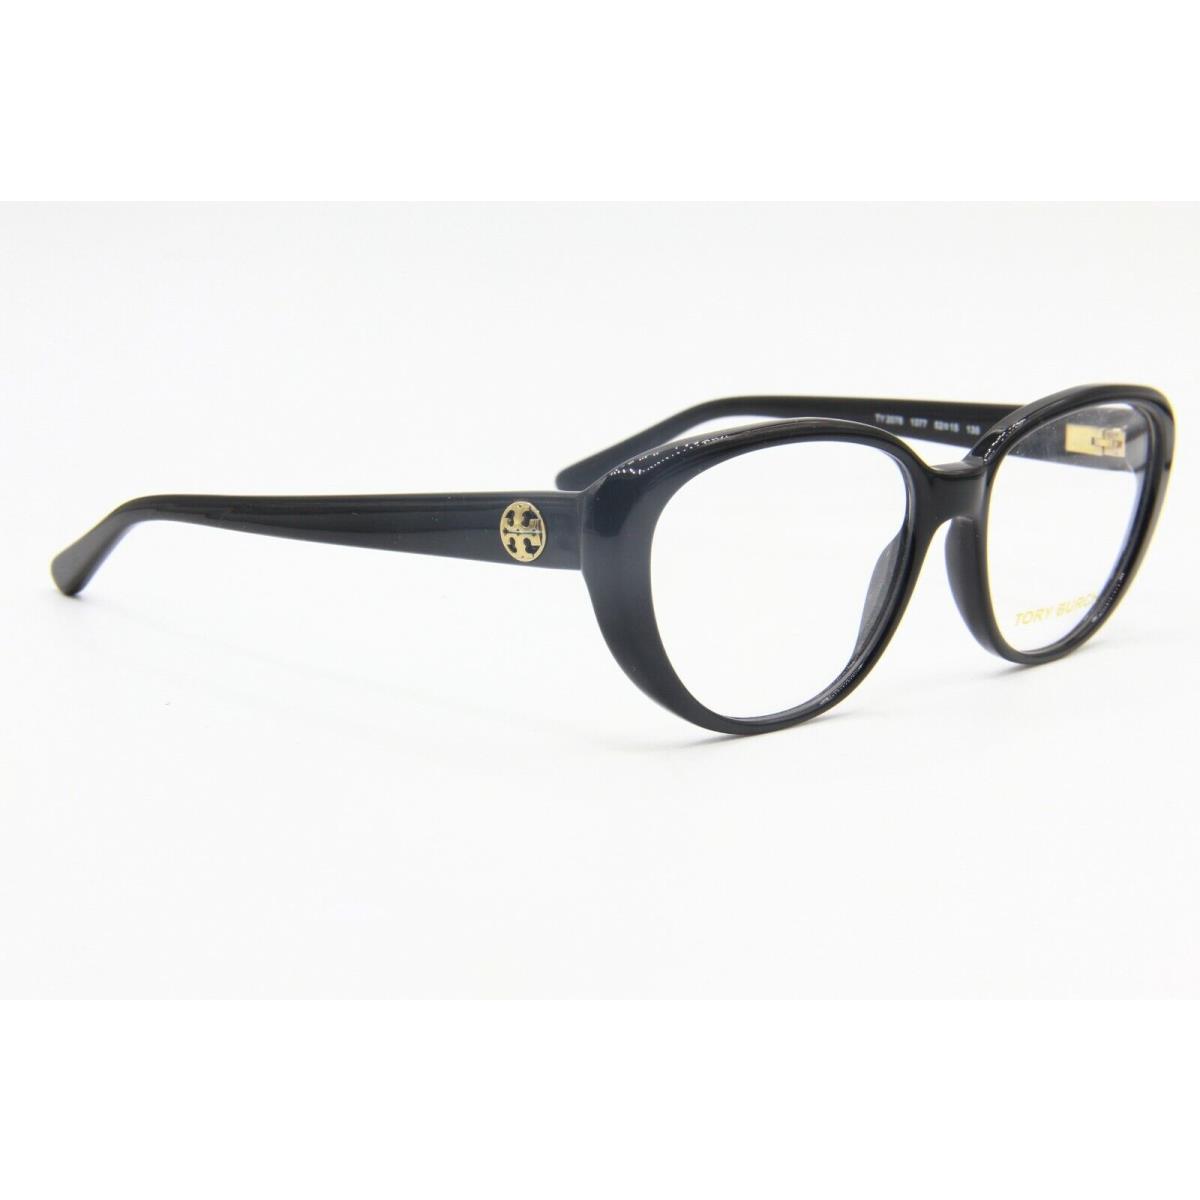 Tory Burch eyeglasses  - Black Frame 1